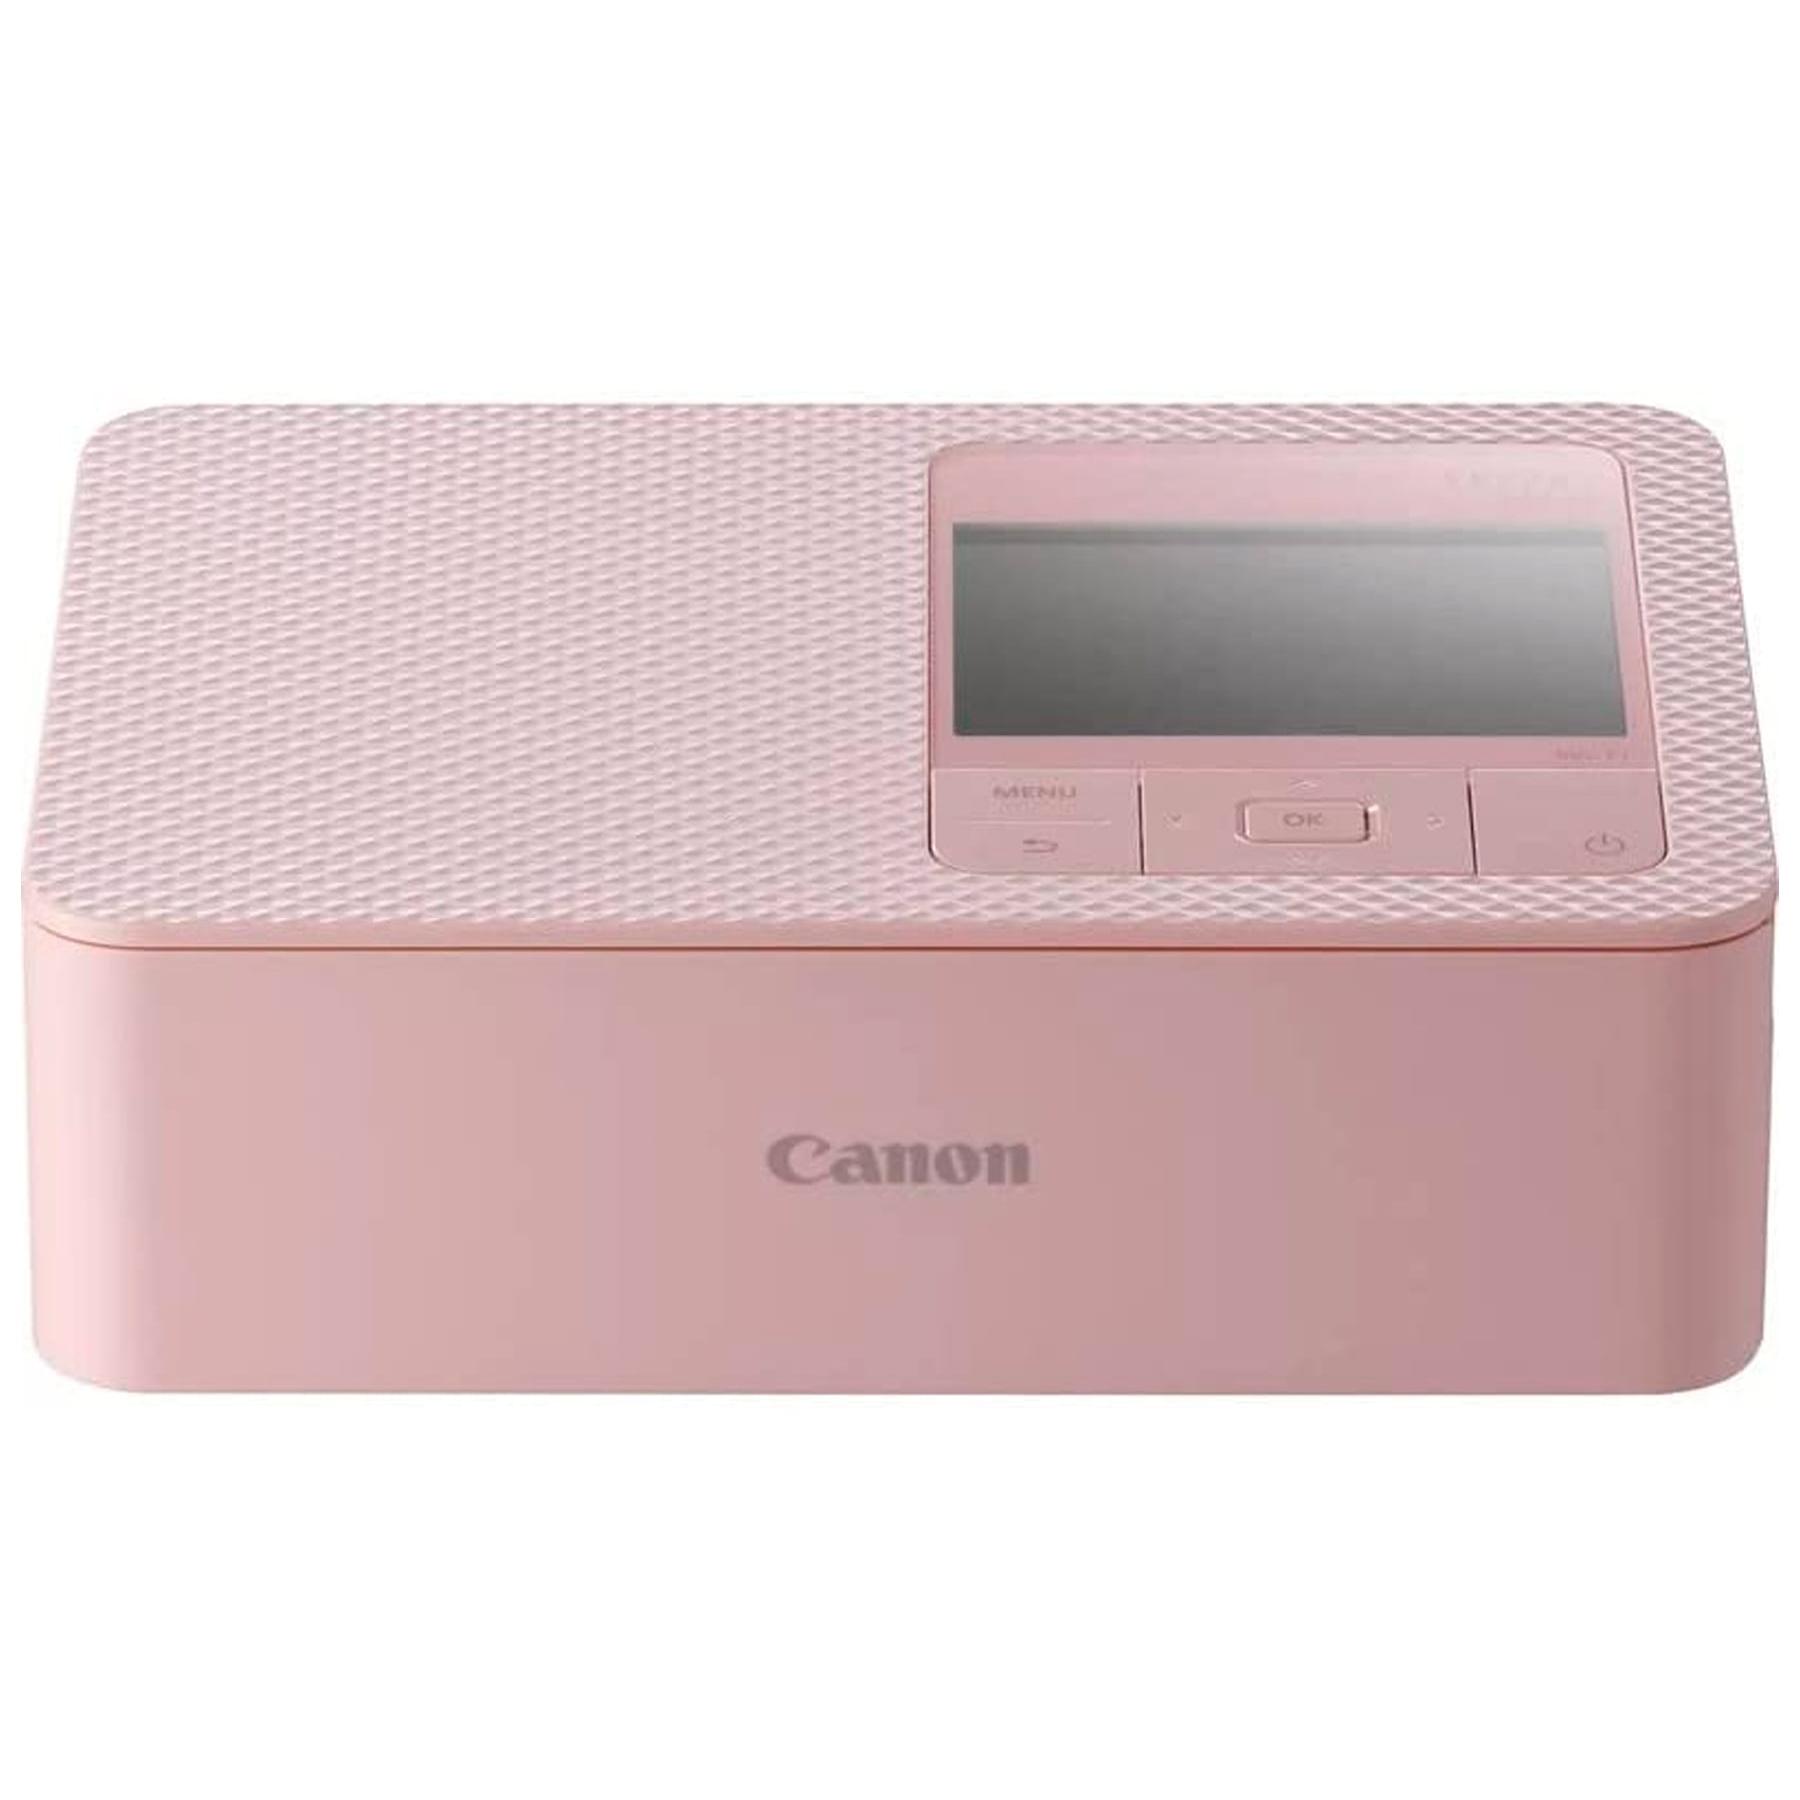 Canon - Canon Selphy CP1500 Pink / Impresora fotográfica portátil